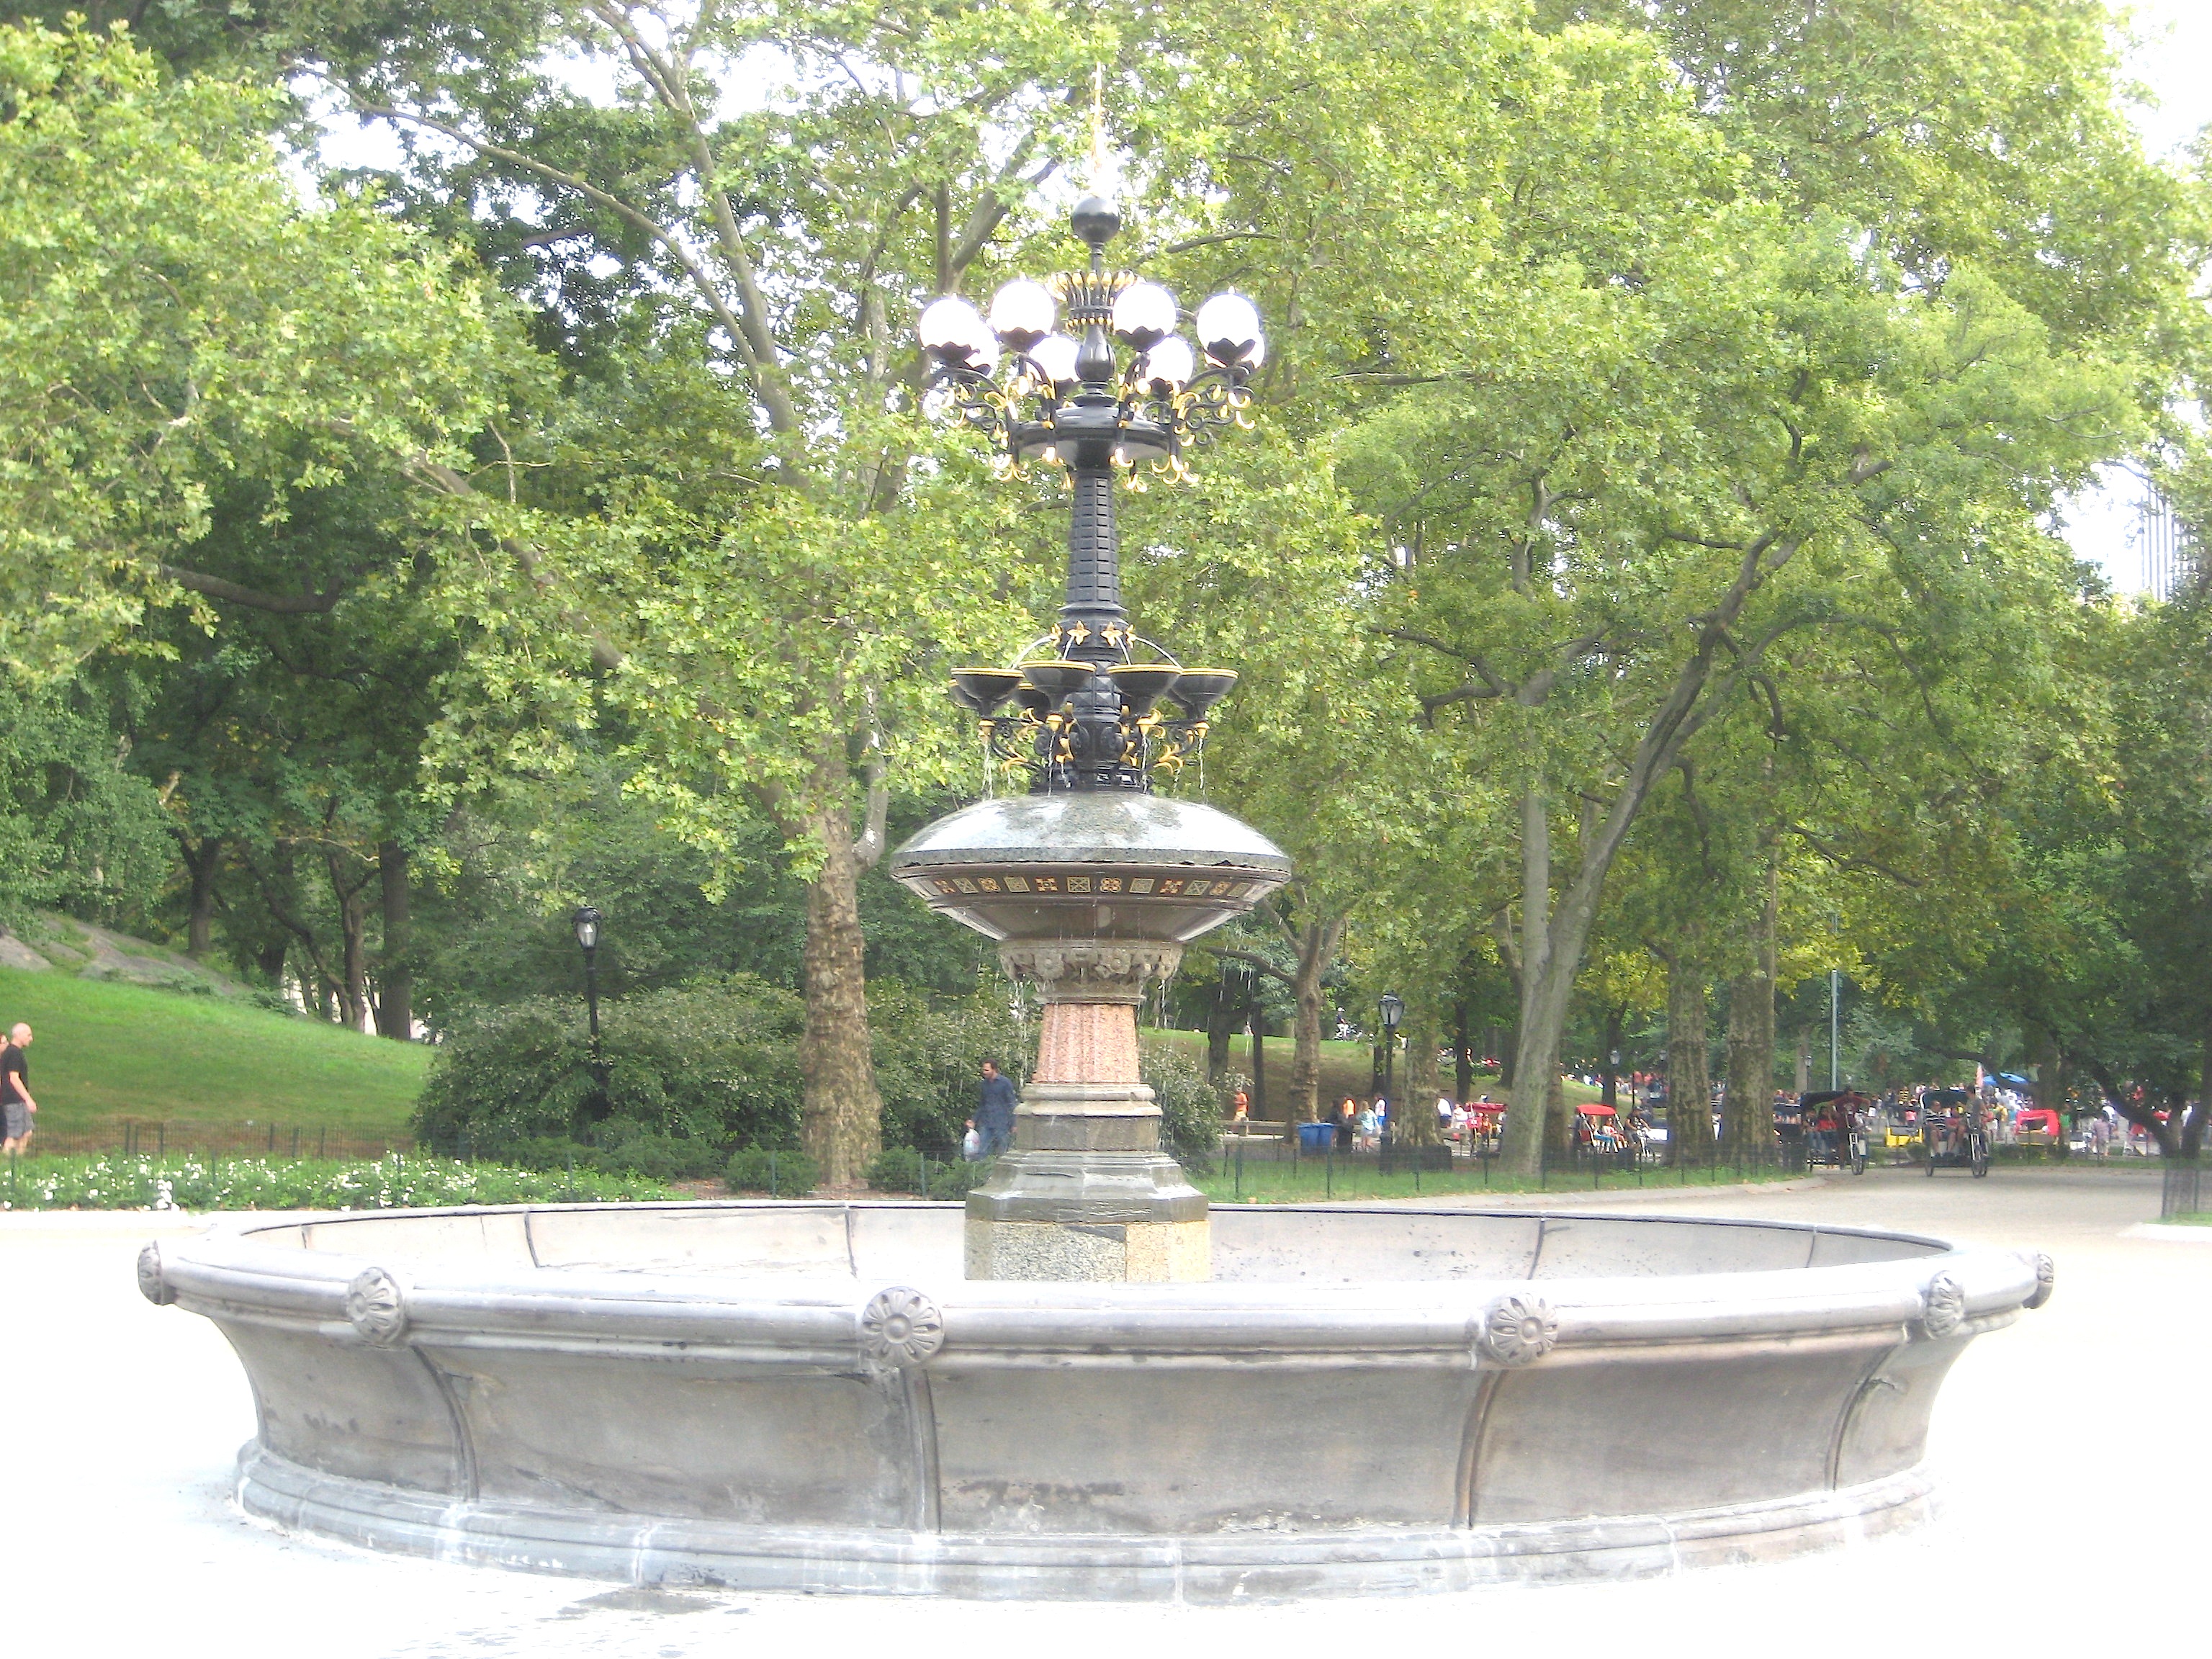 Victorian Gardens Amusement Park in Central Park, New York